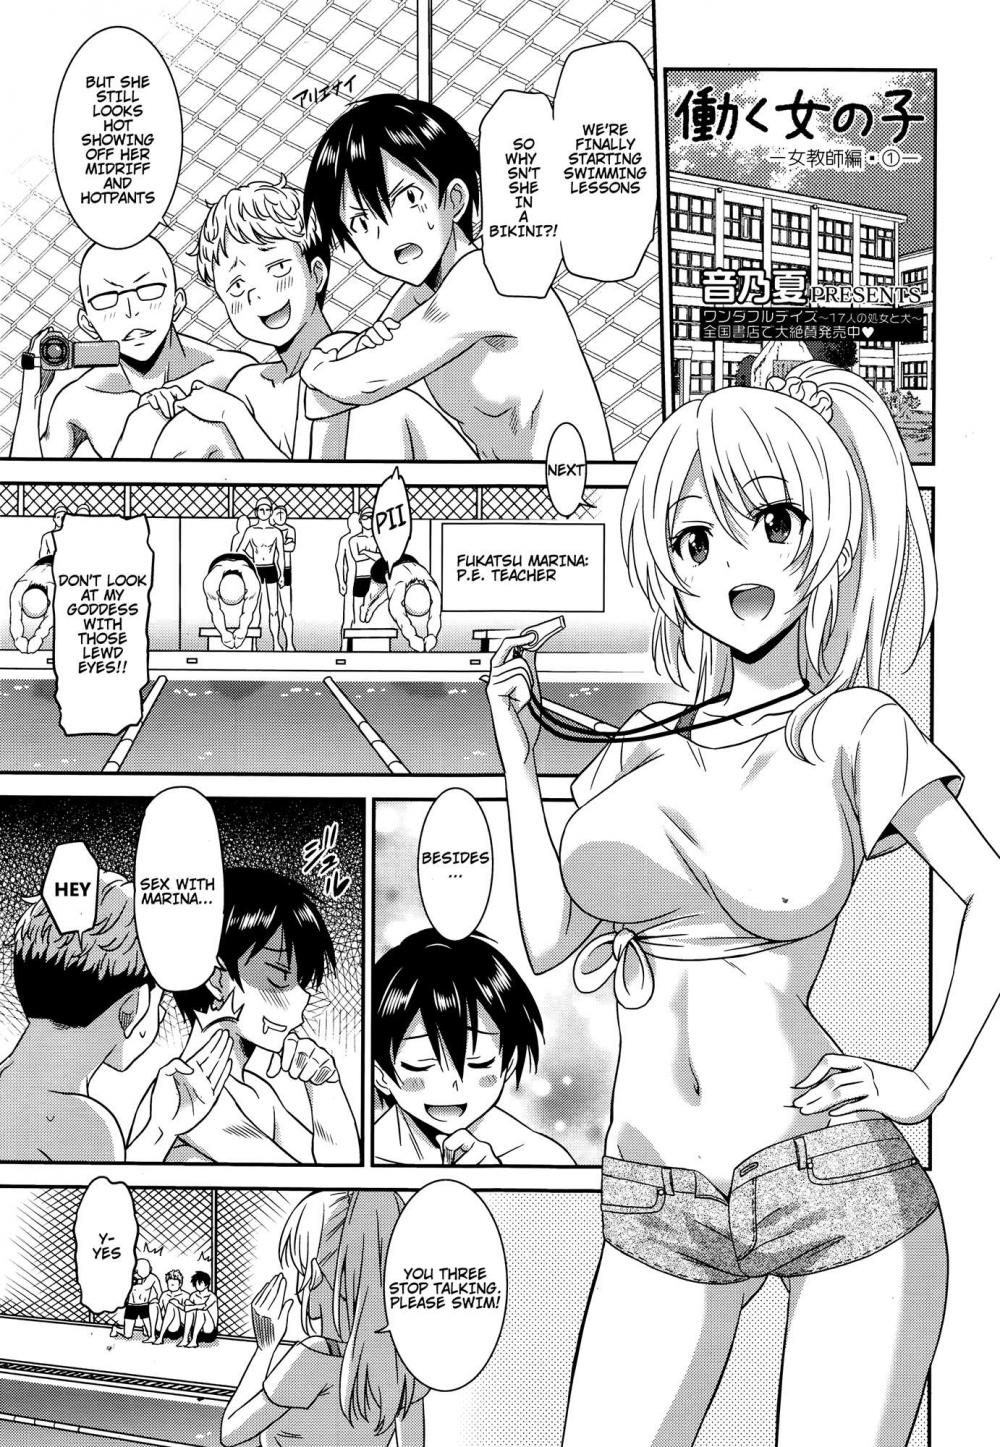 Female Pe Teacher Porn - Working Girl -Female Teacher Chapter-Chapter 1-Hentai Manga Hentai Comic -  Online porn video at mobile